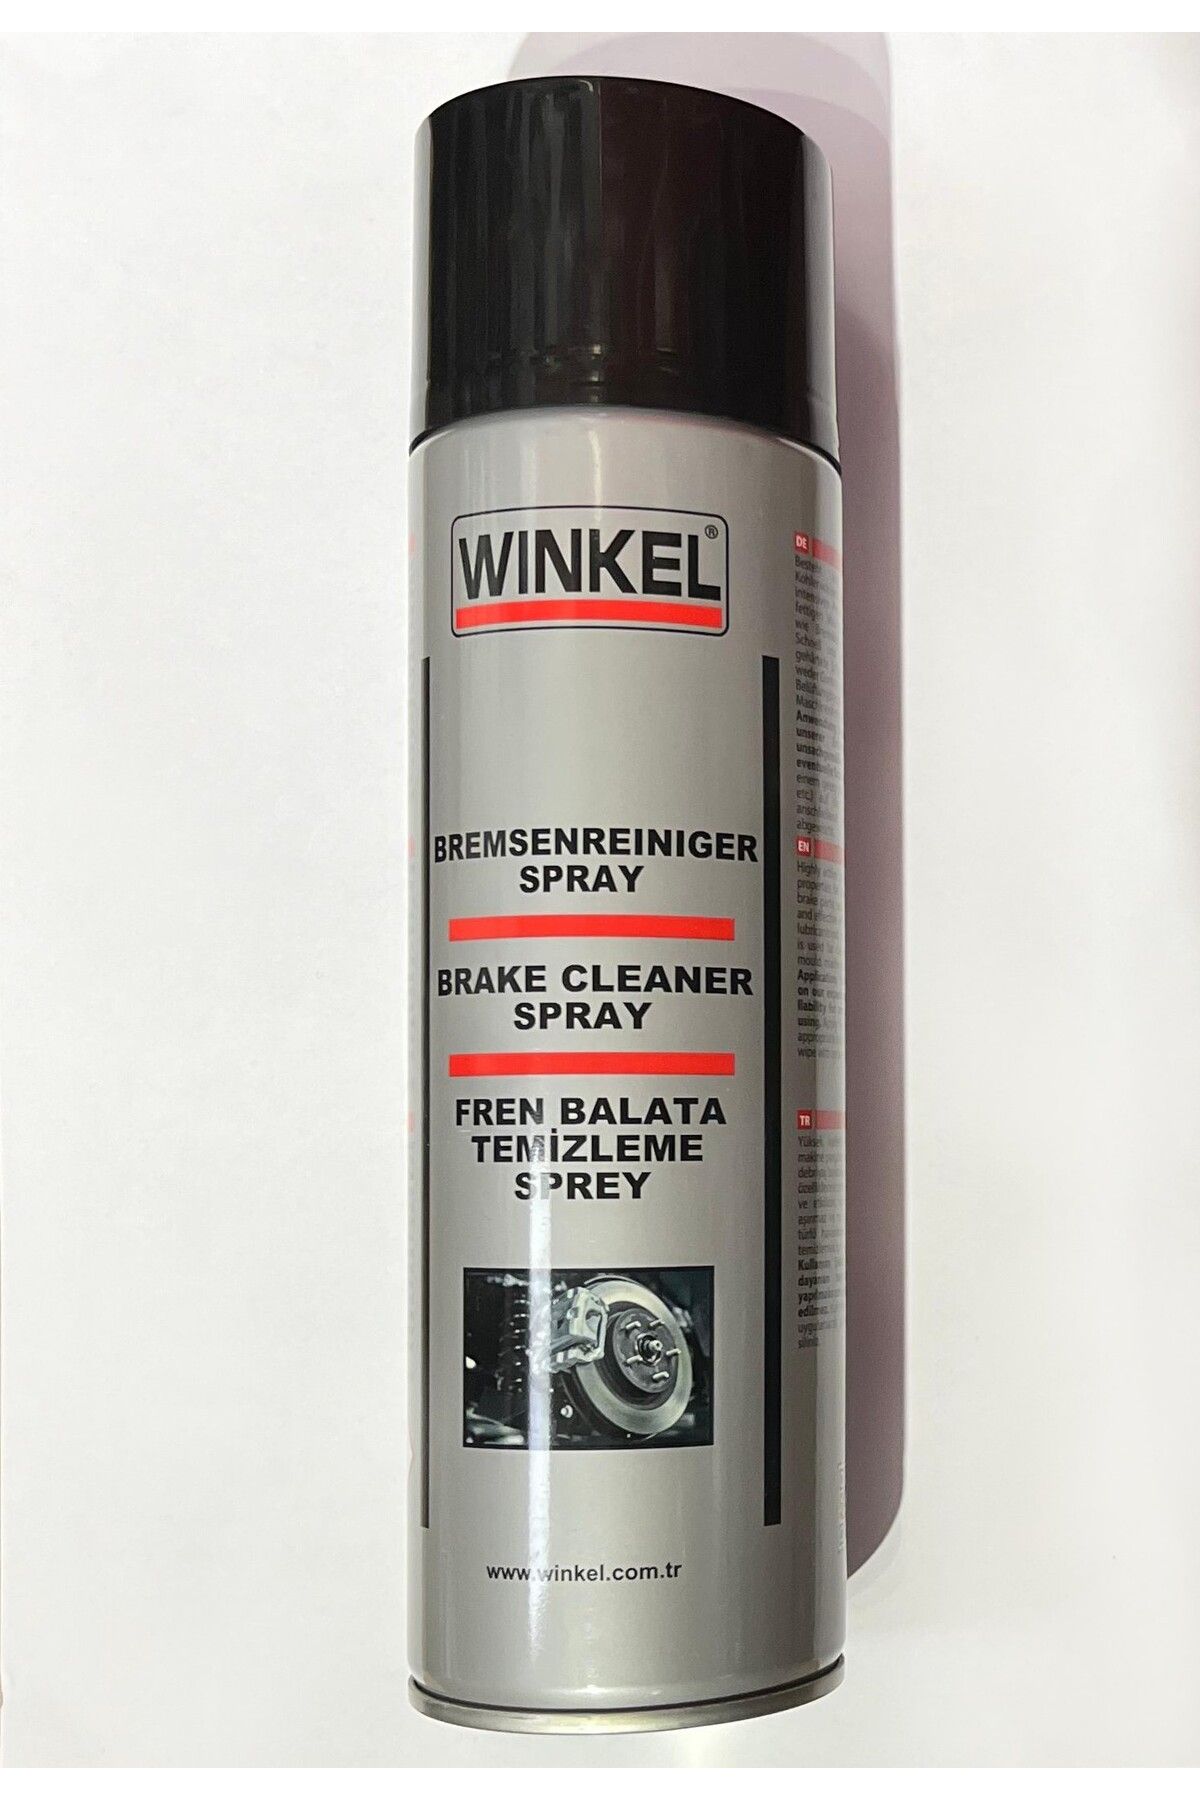 Winkel Bremsenreiniger spray - fren balata temizleme sprey 500ml